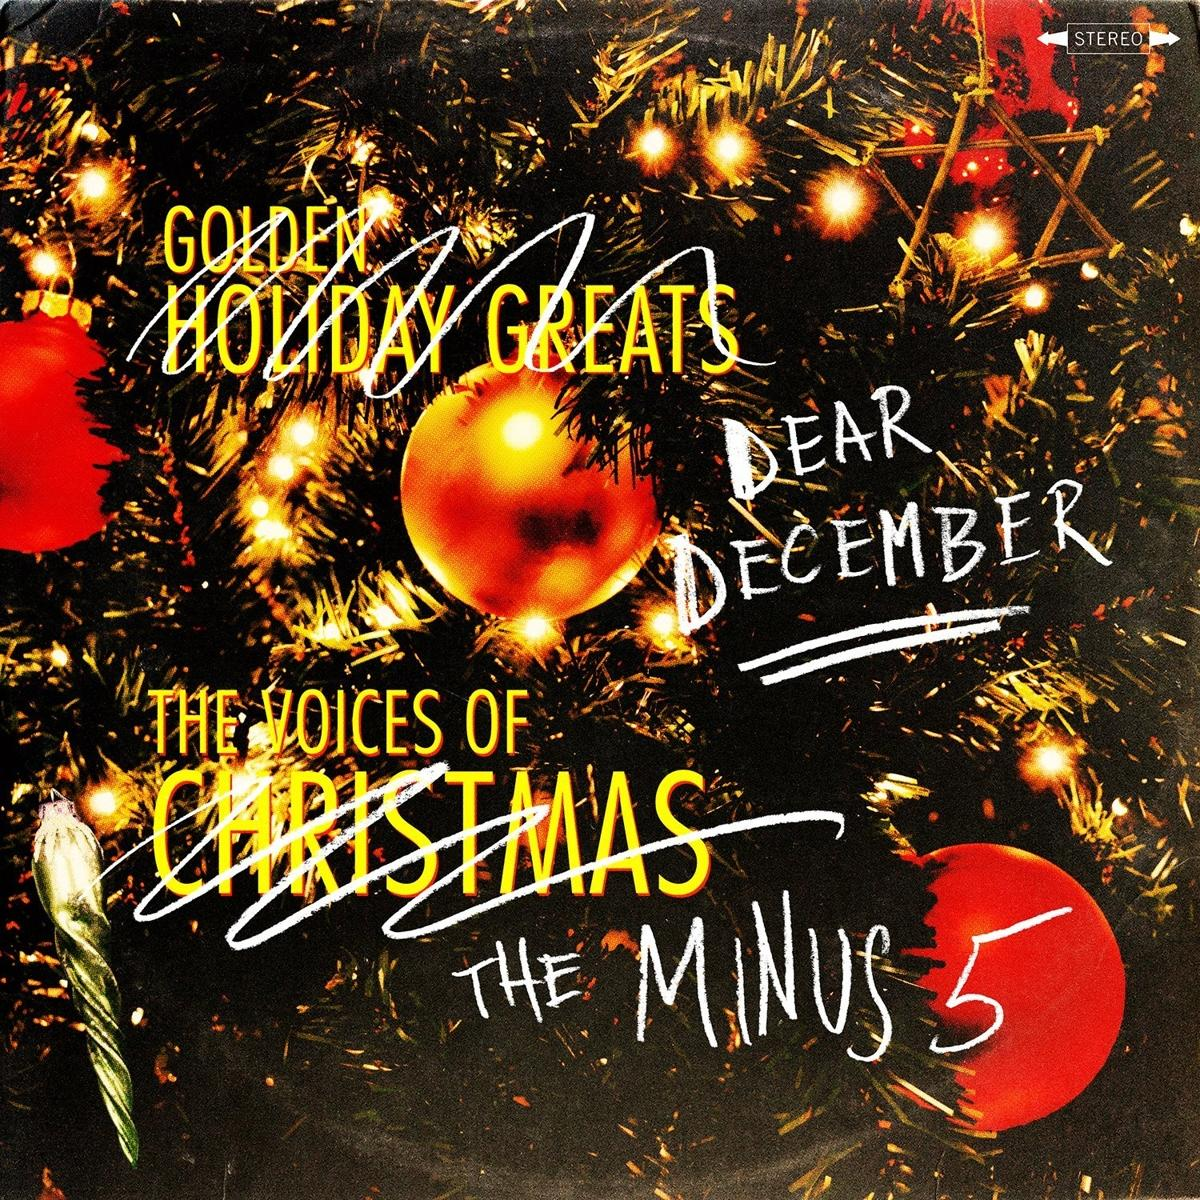 Dear - December 5 The Minus (CD) -